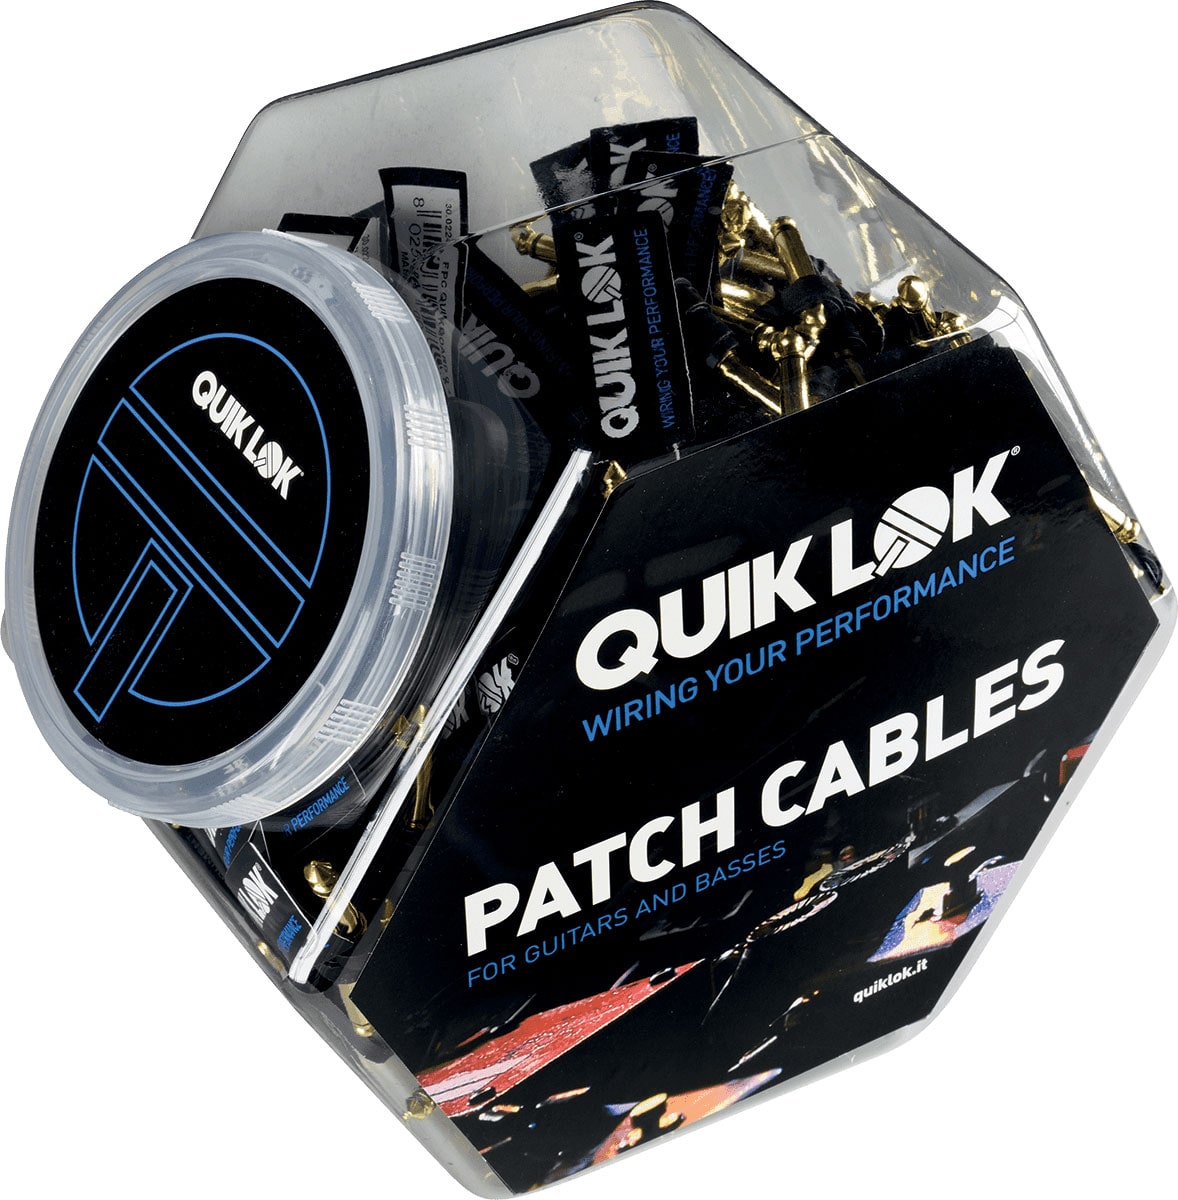 QUIKLOK FPCQUIKBOARD-PACK PATCH CABLES MIX 65 CABLES